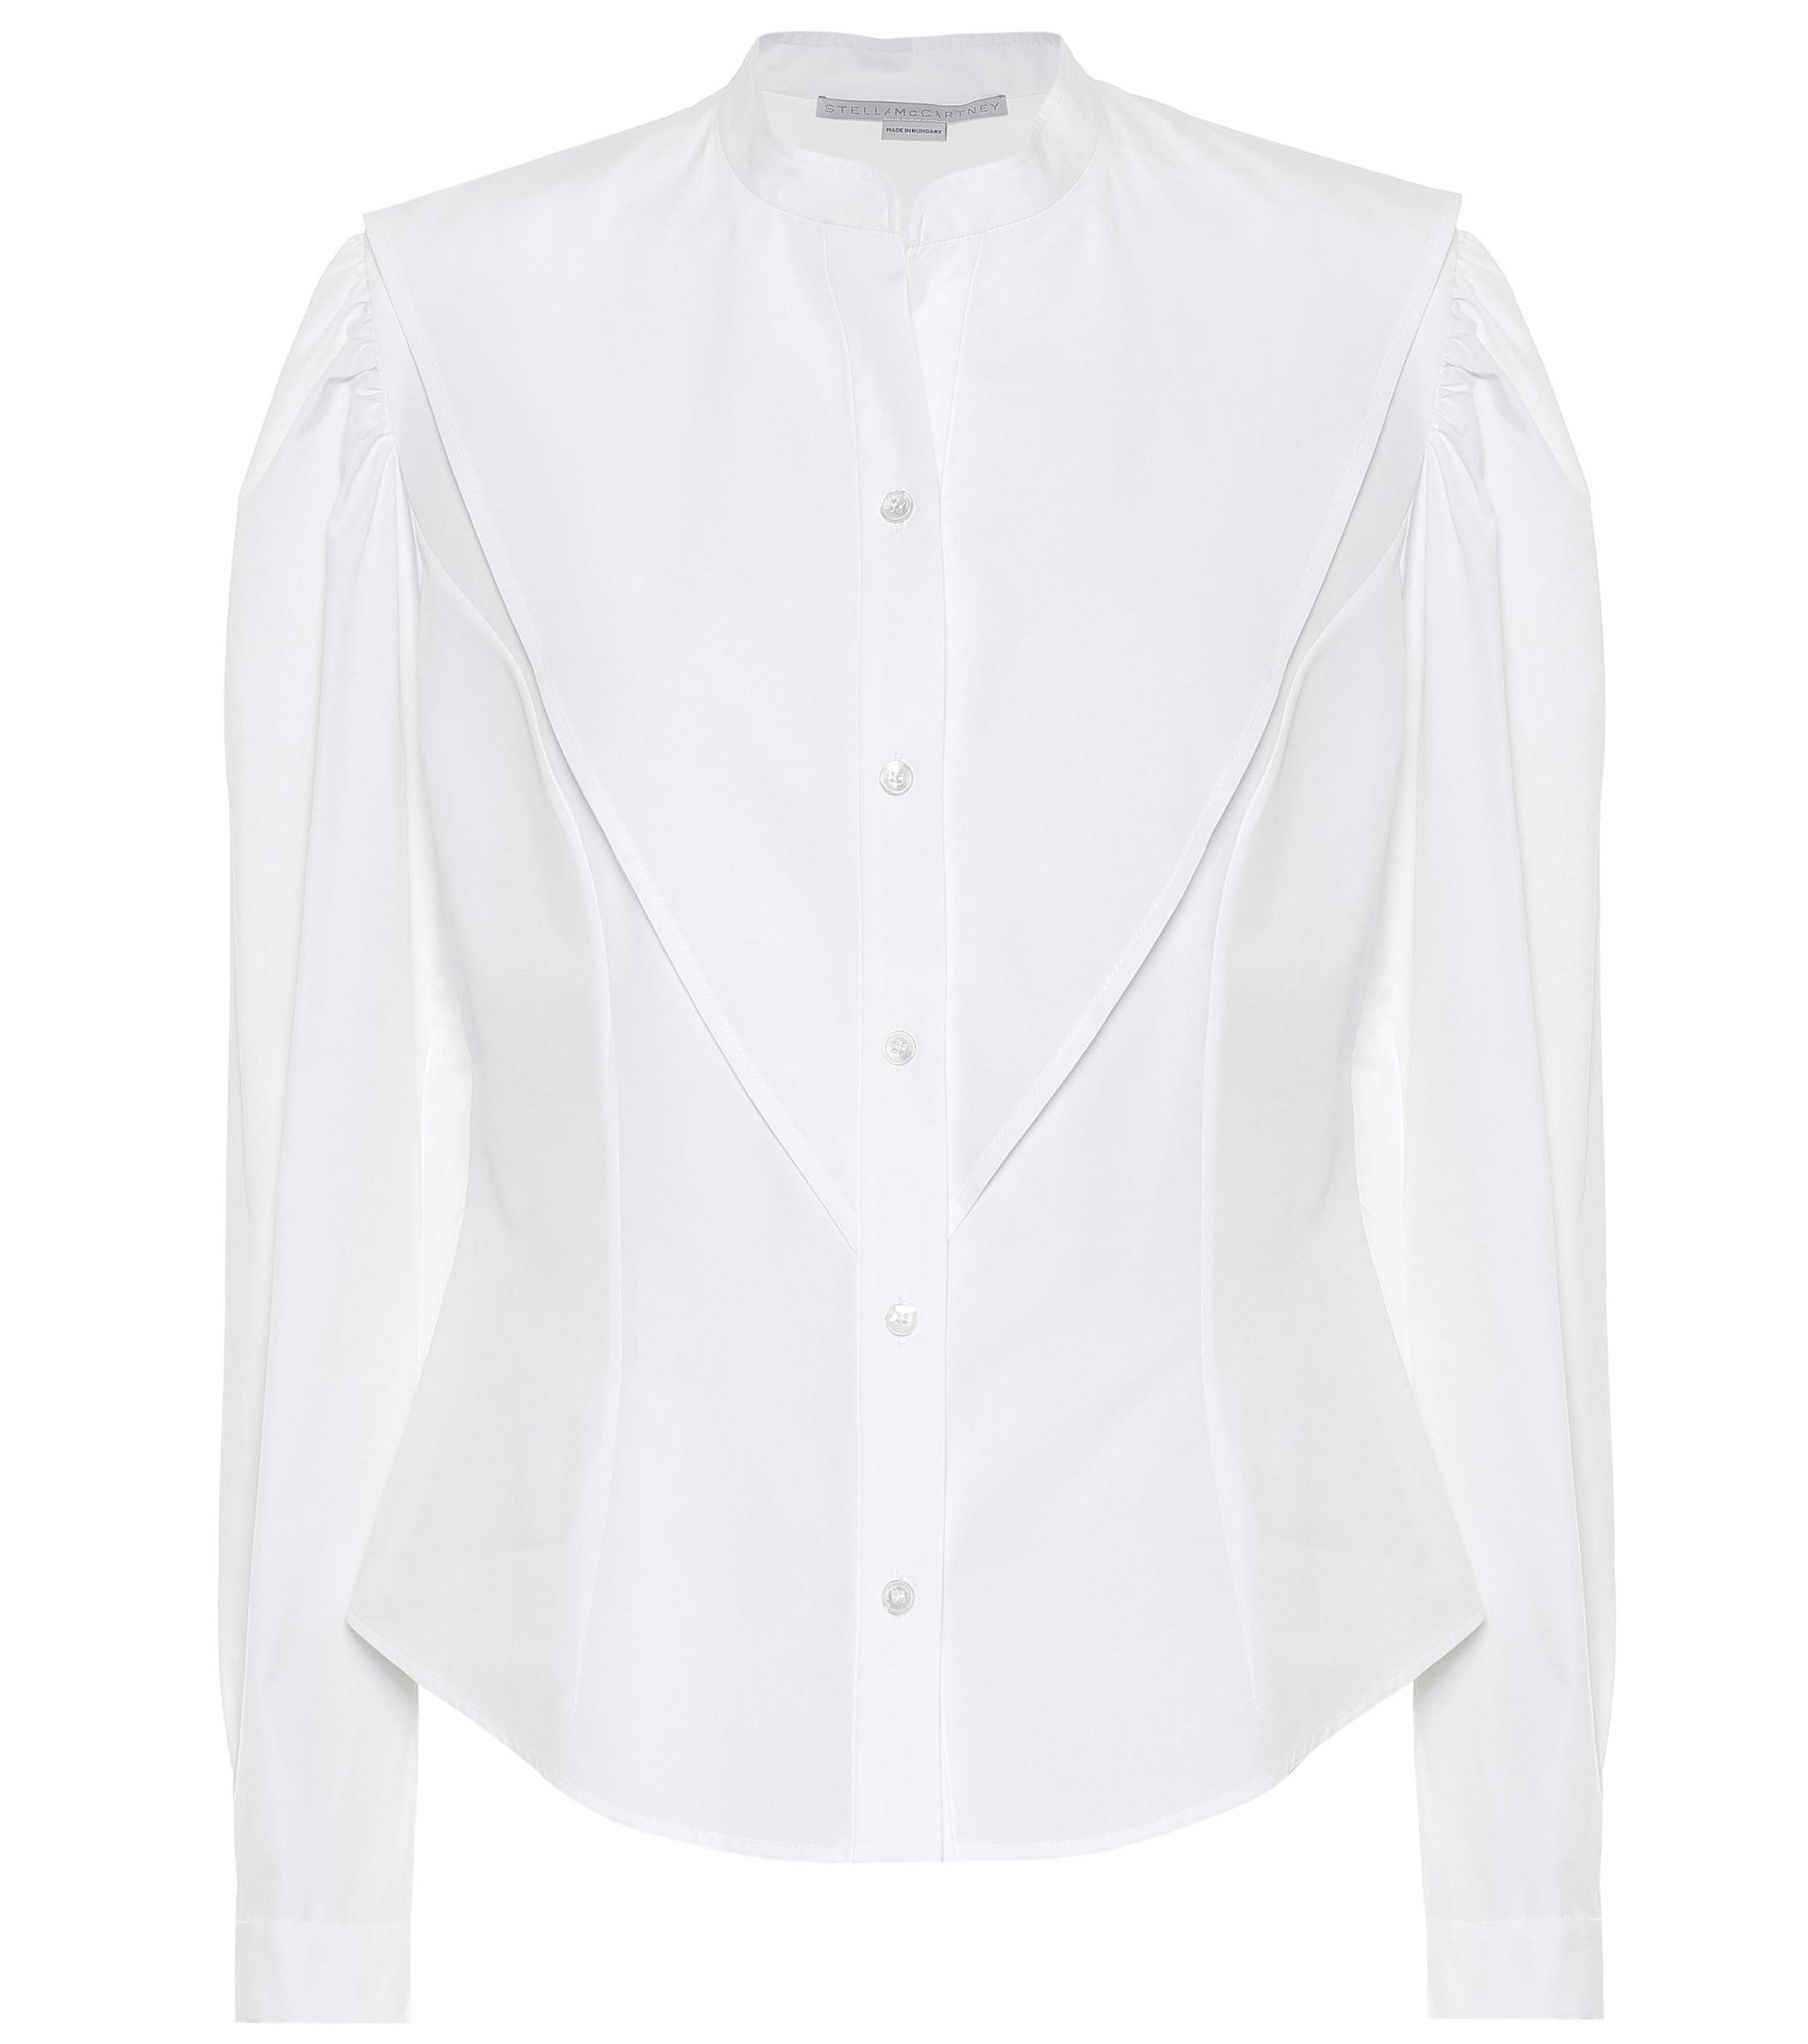 Stella McCartney Cotton-poplin Shirt in White - Lyst